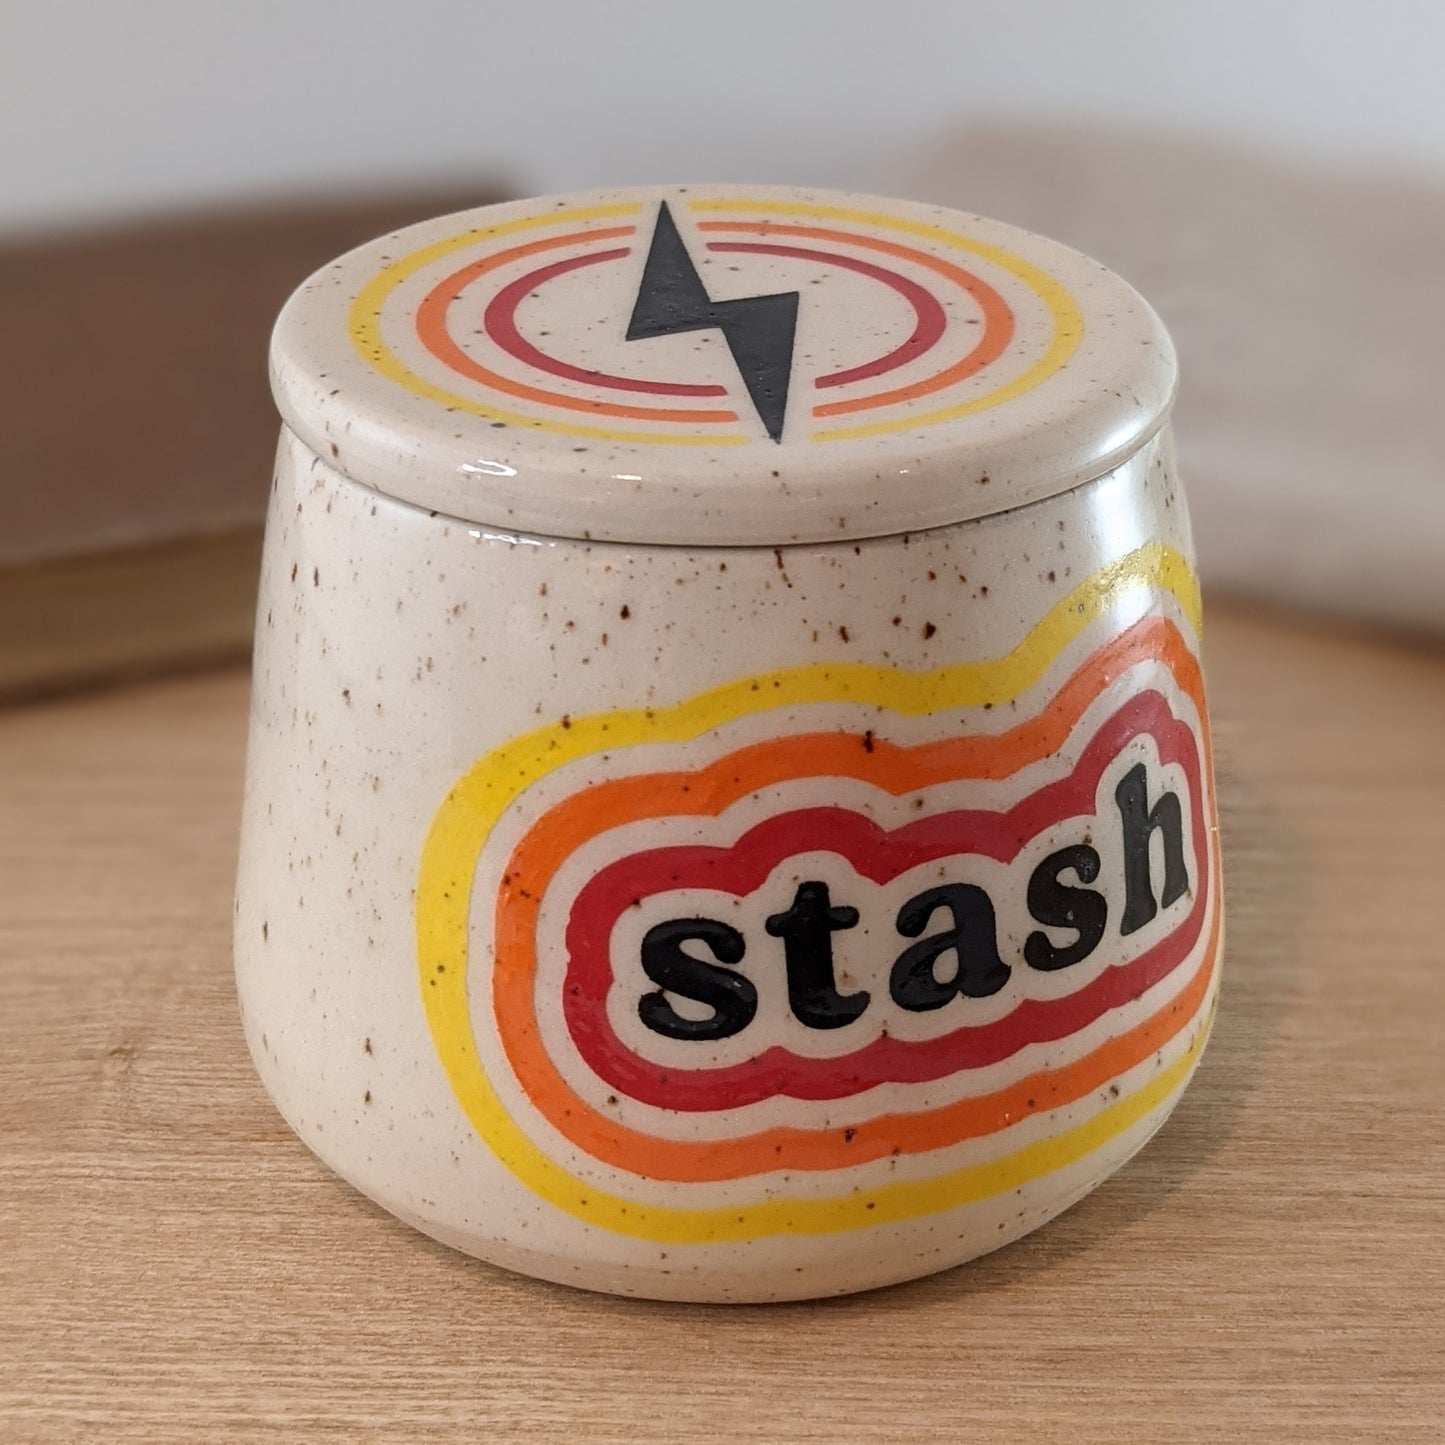 Bodhi Stash Jar